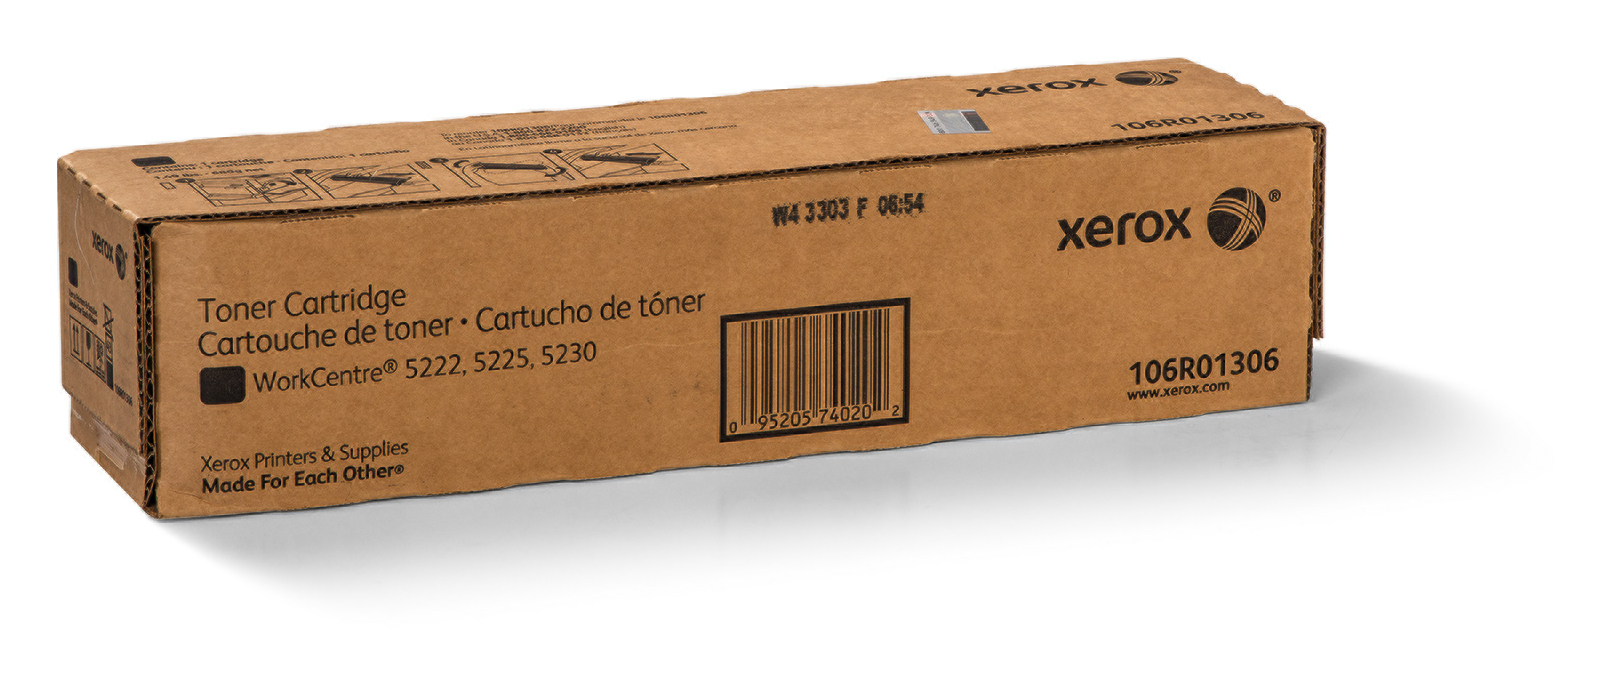 Toner Cartridge 106R01306 Genuine Xerox Supplies